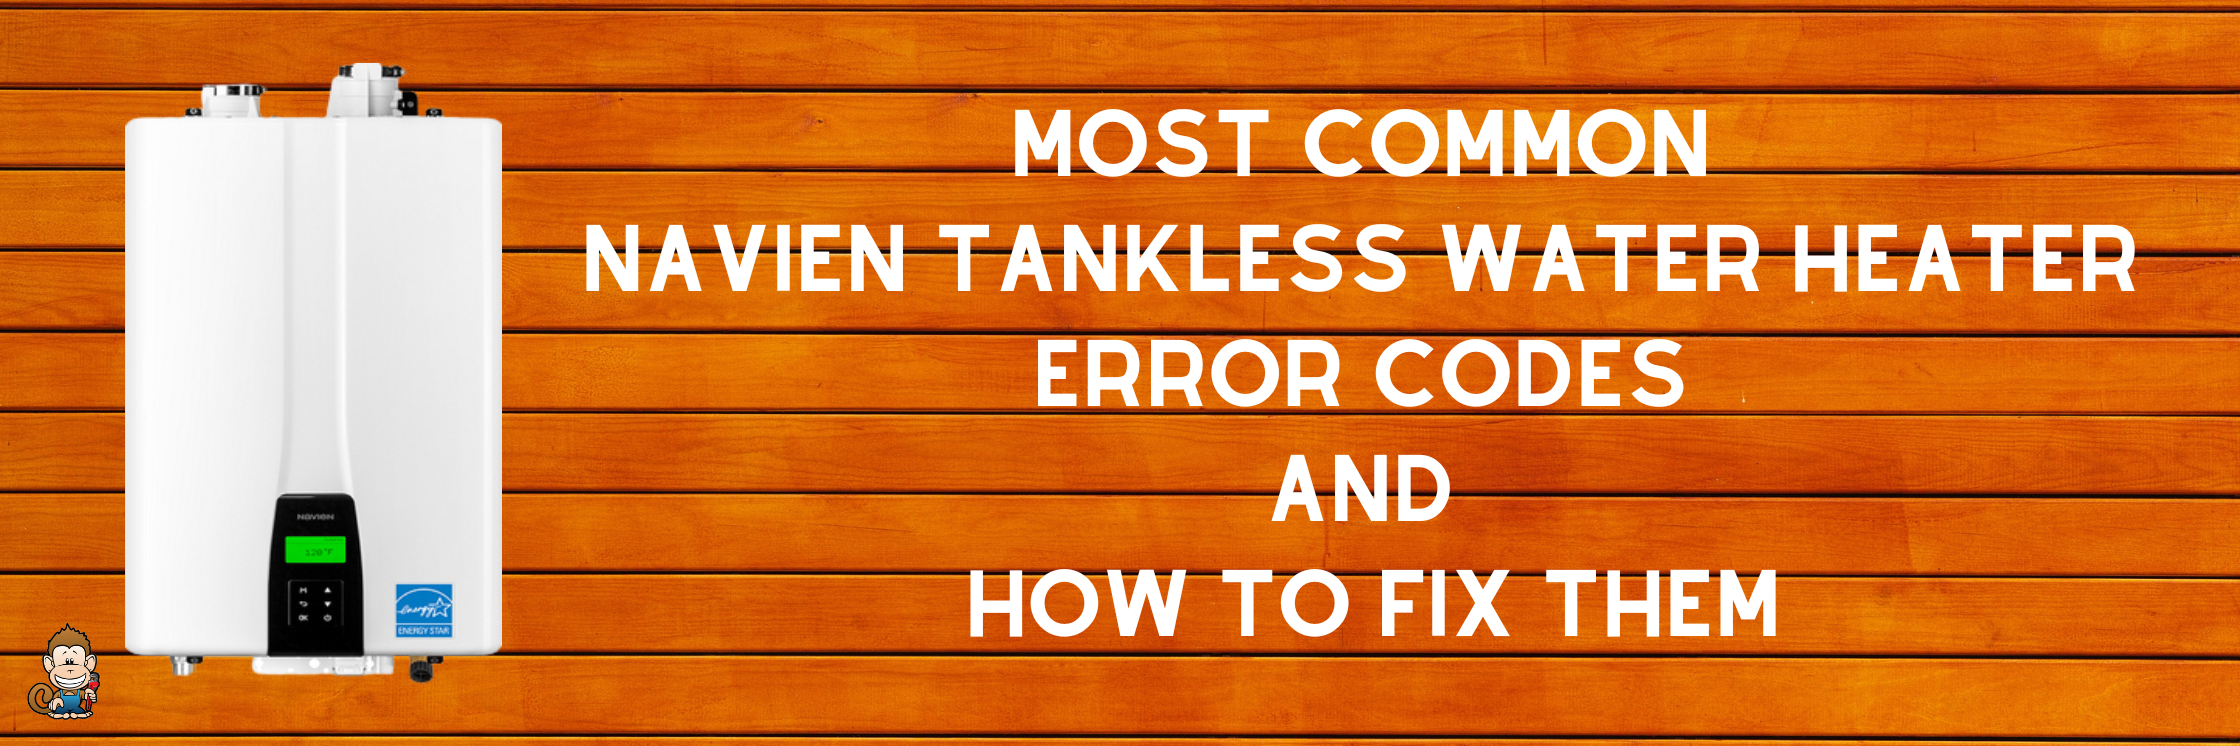 Most Common Navien Tankless Water Heater Error Codes (Video)